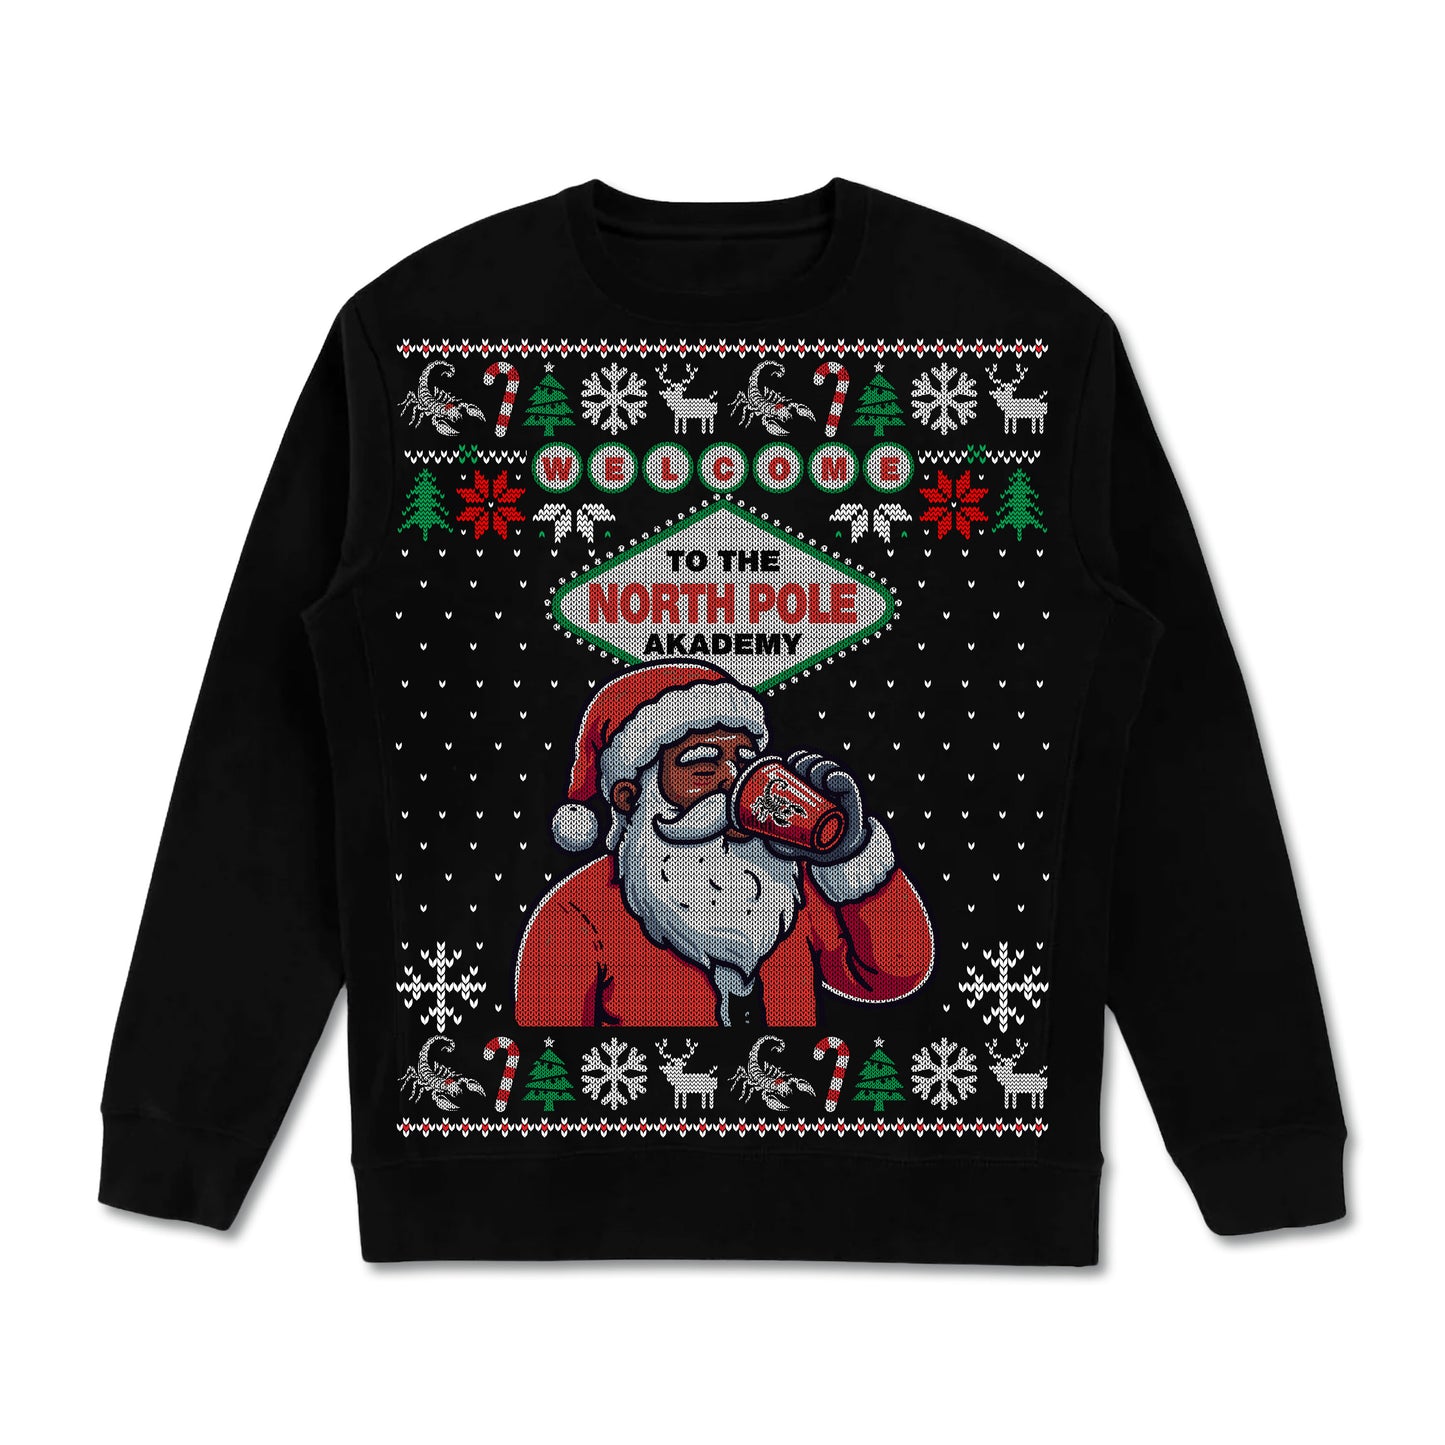 The Akademy Christmas Ugly Sweater